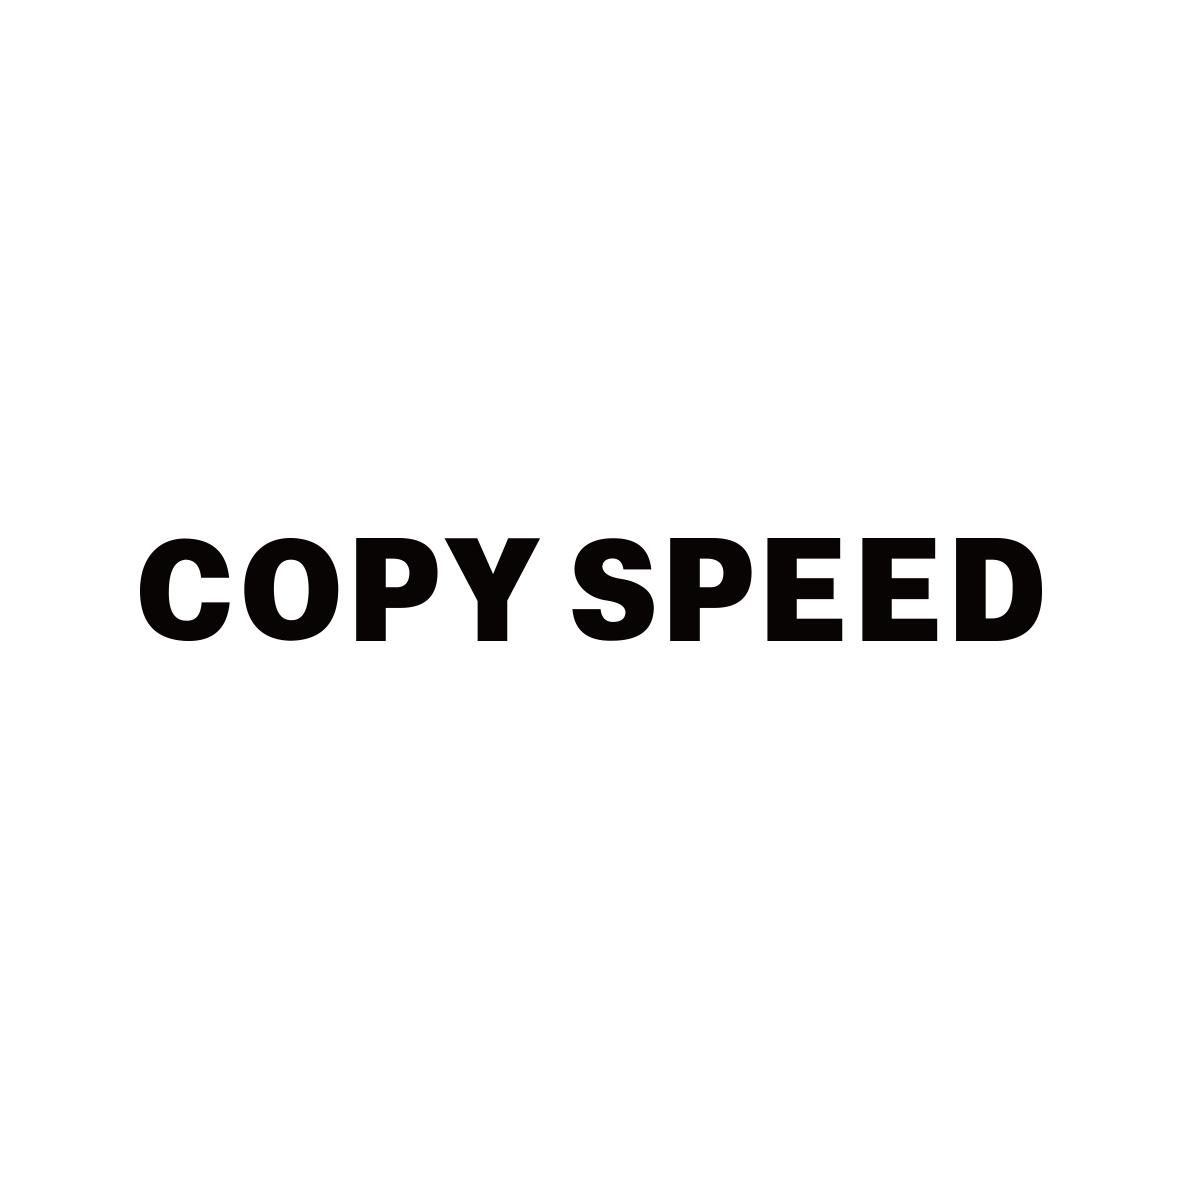 COPY SPEED新闻纸商标转让费用买卖交易流程